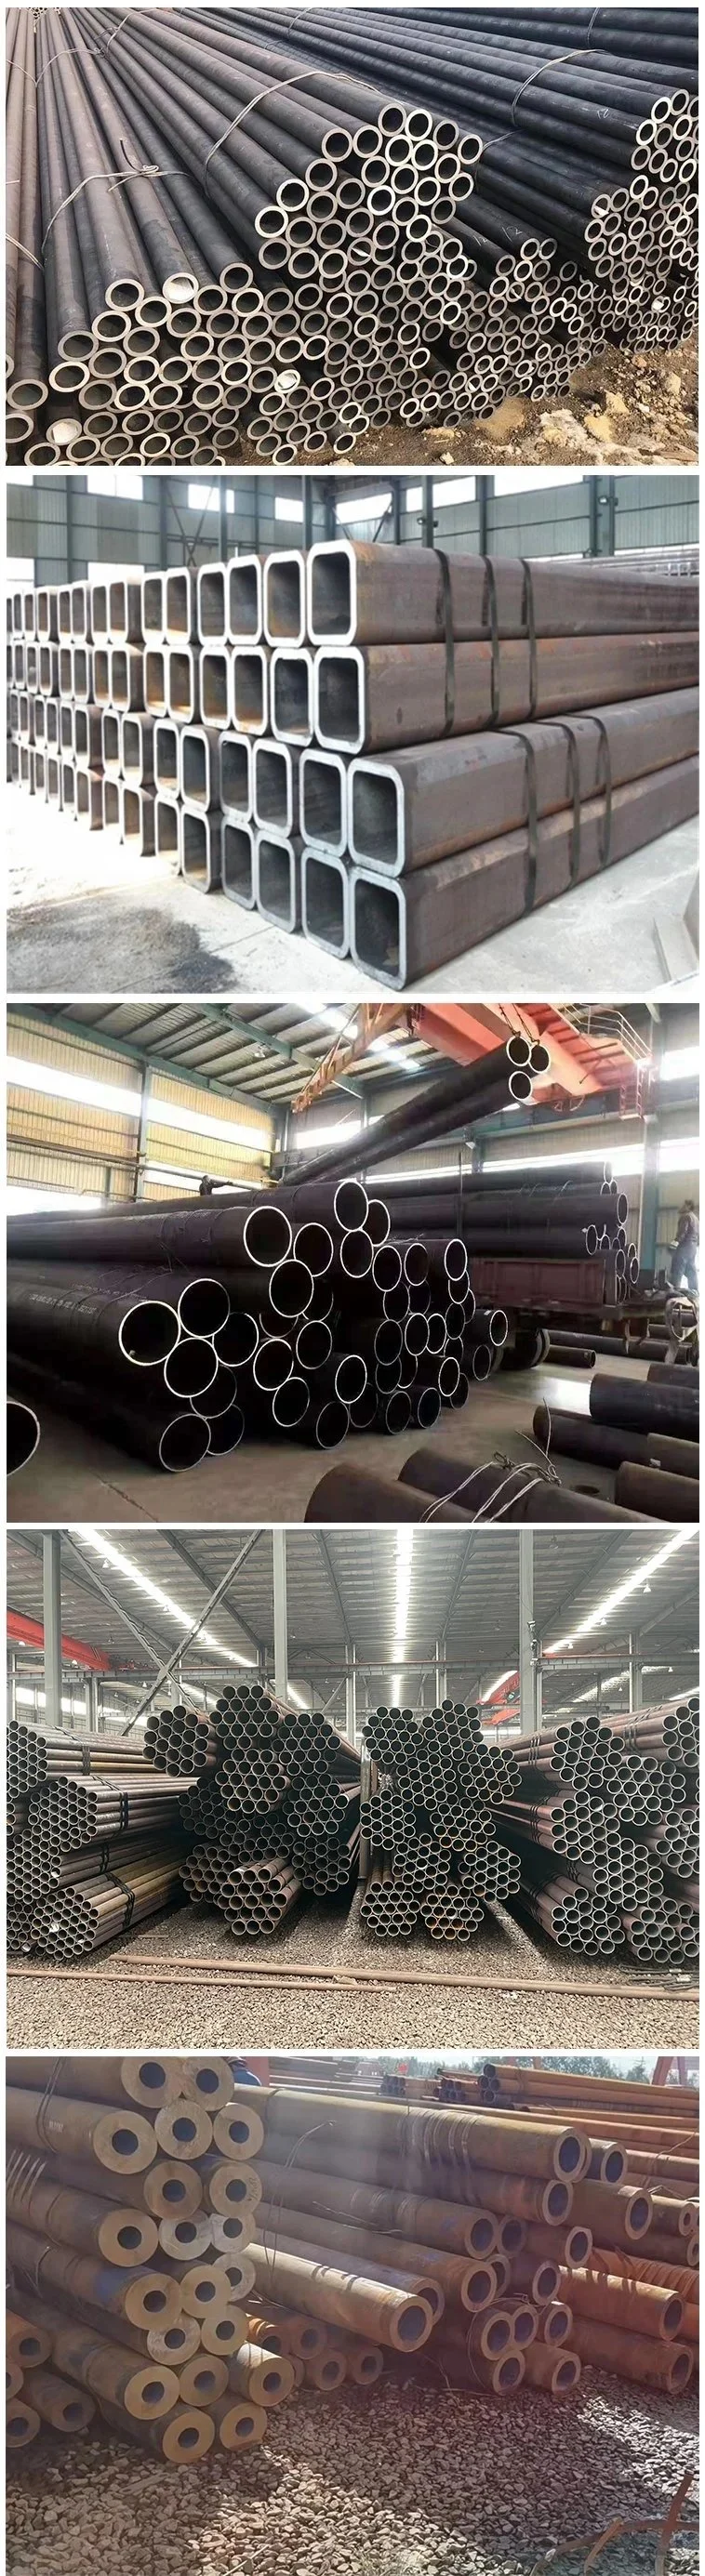 Hot Product Large Diameter Seamless Steel Tube